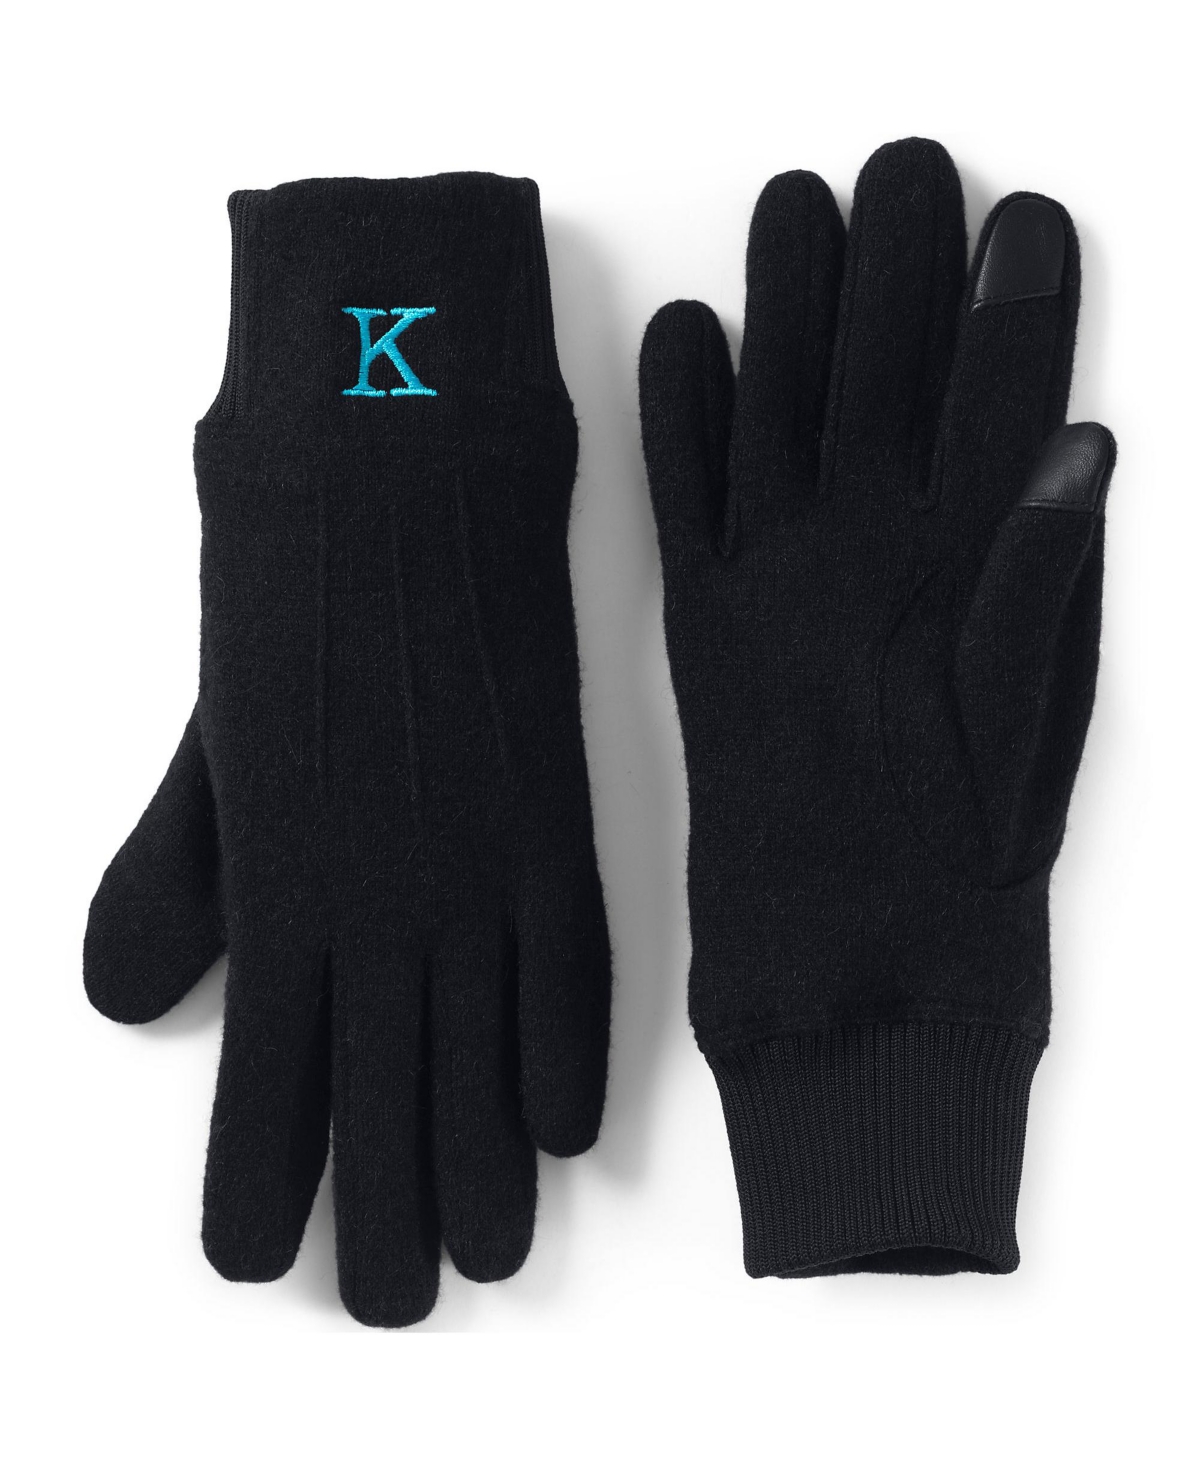 Women's Ez Touch Screen Gloves - Black